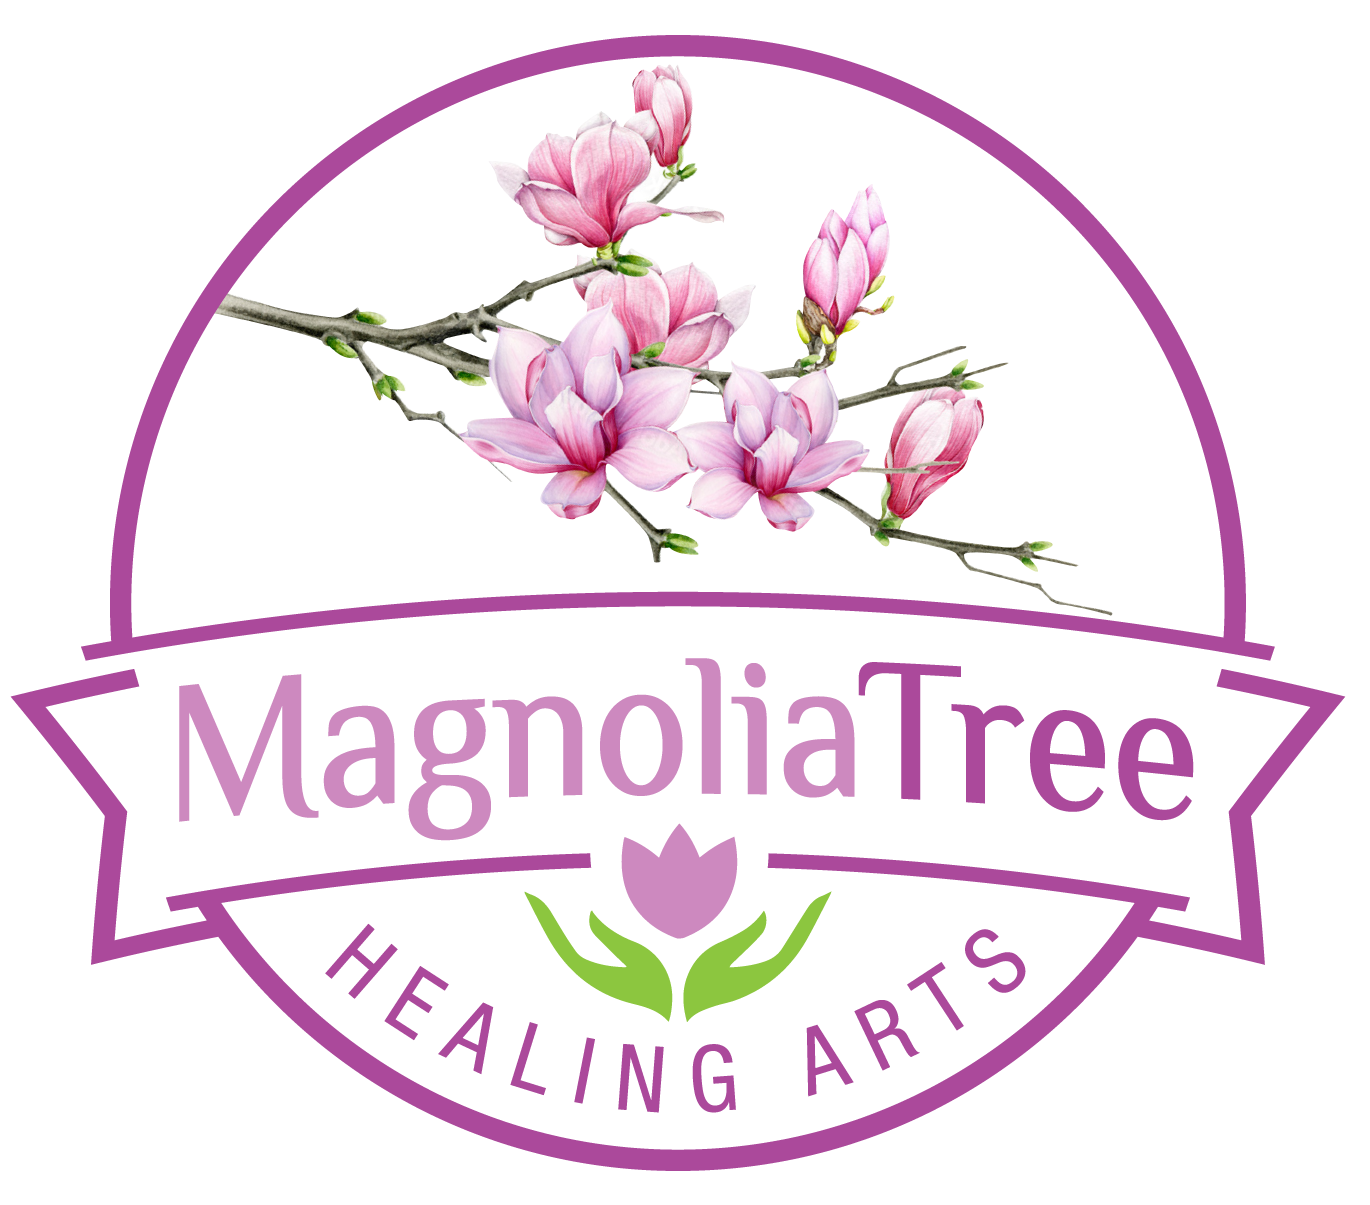 Magnolia Tree Healing Arts